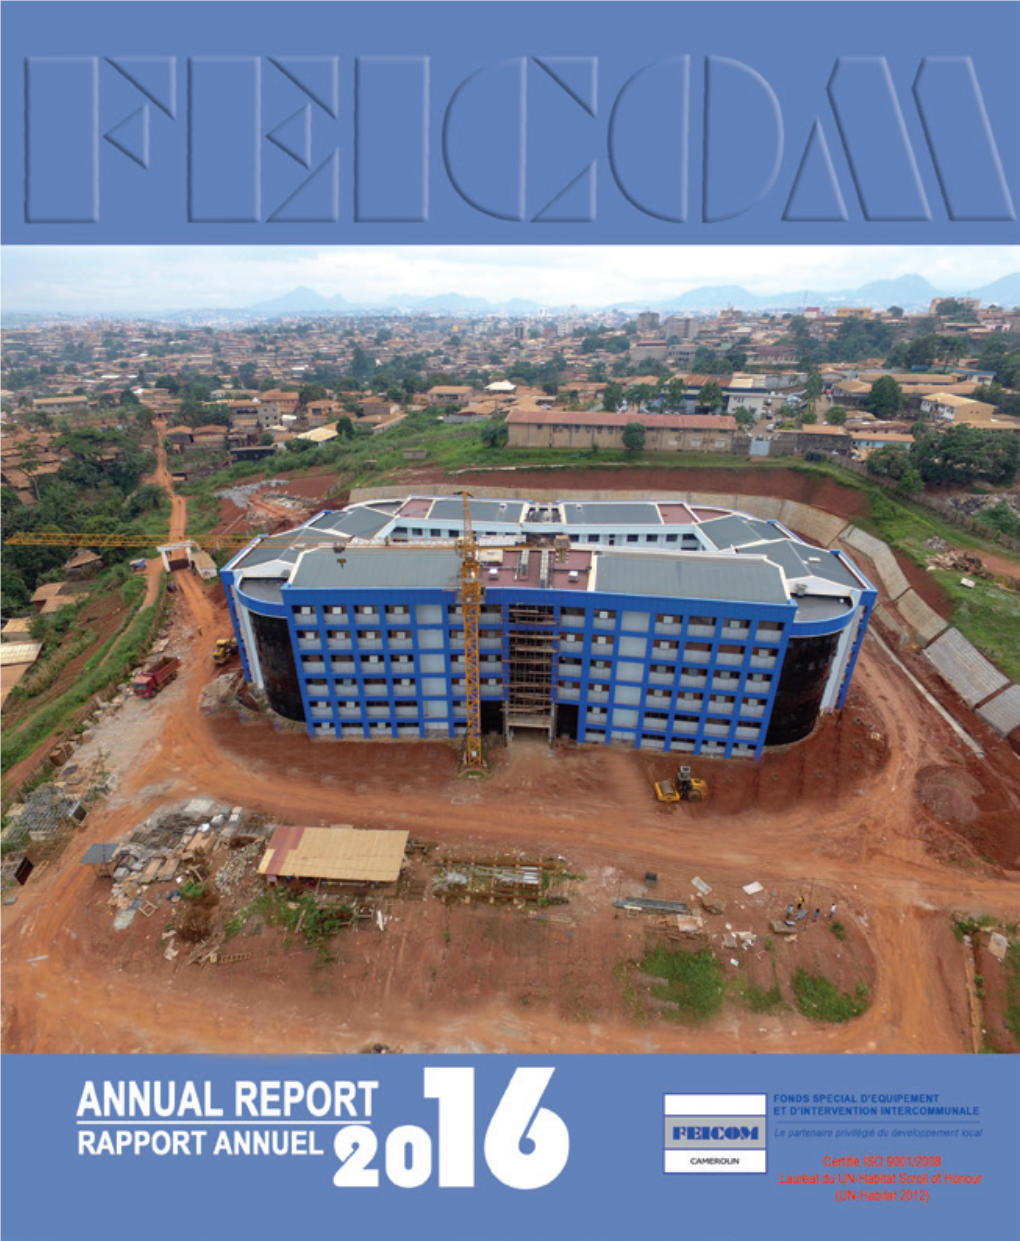 1 the 2016 Annual Report Rapport Annuel 2016